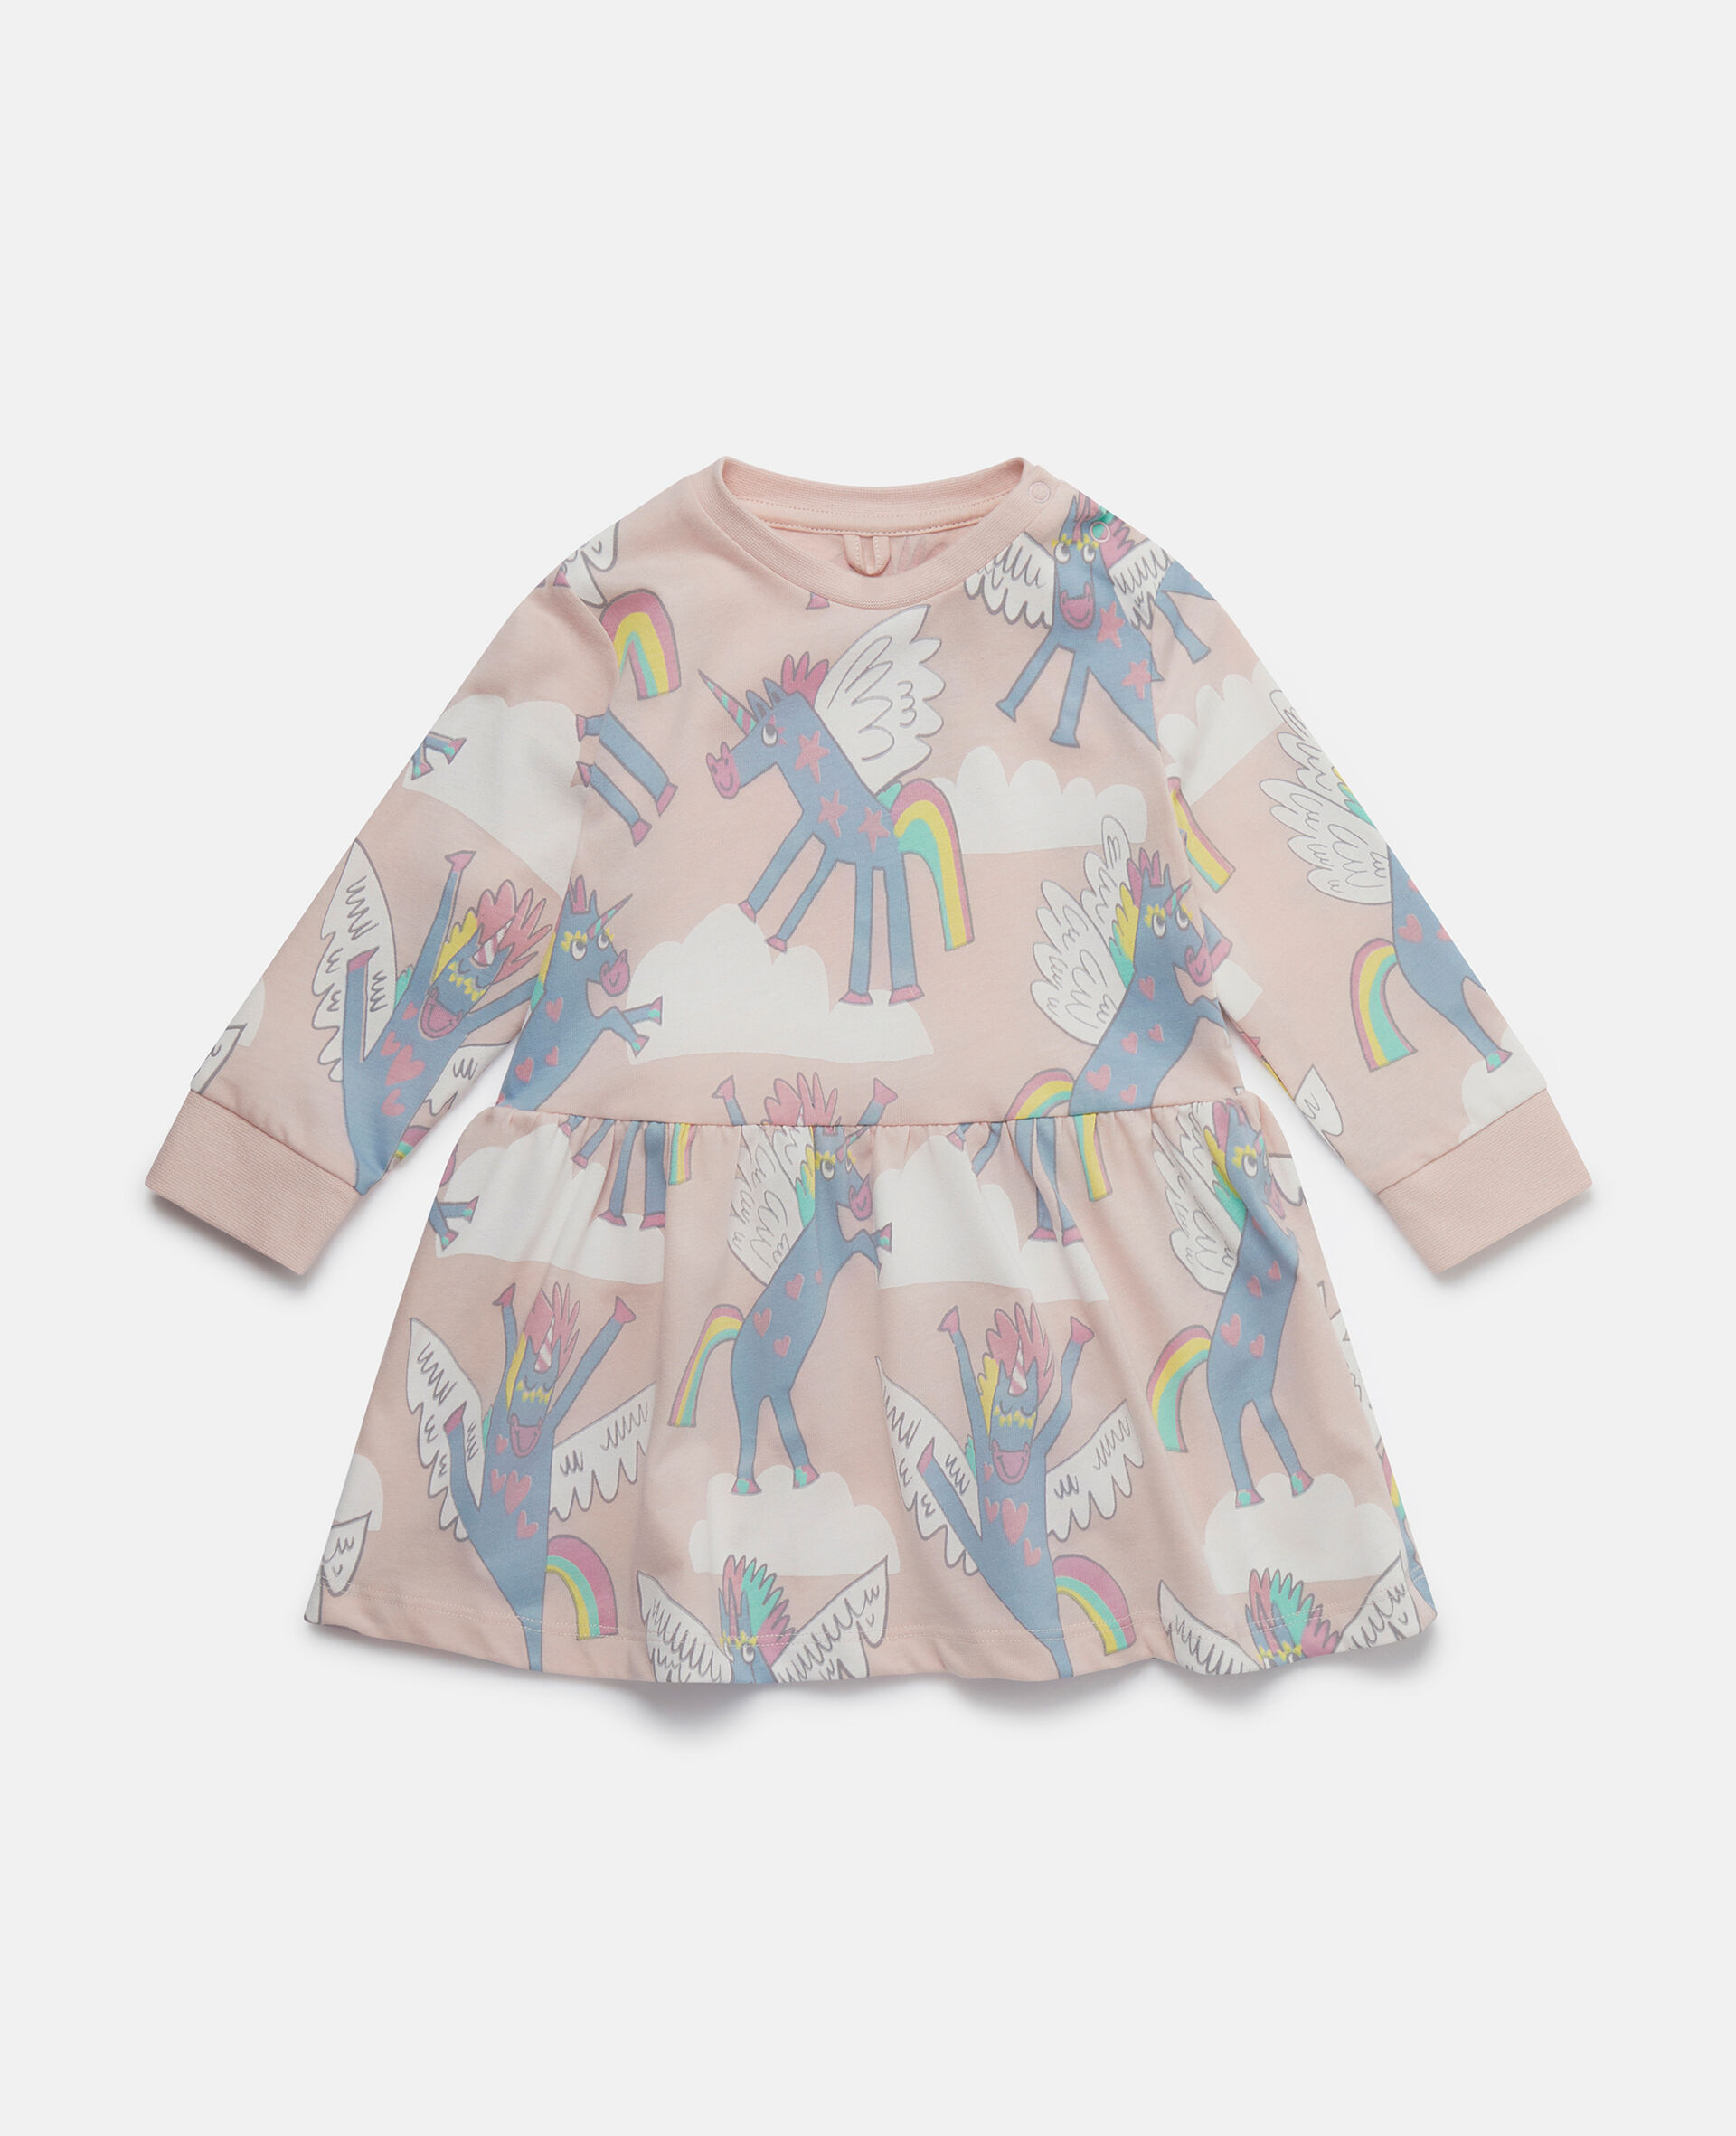 Rainbow Unicorn Print Dress-Multicolour-large image number 0